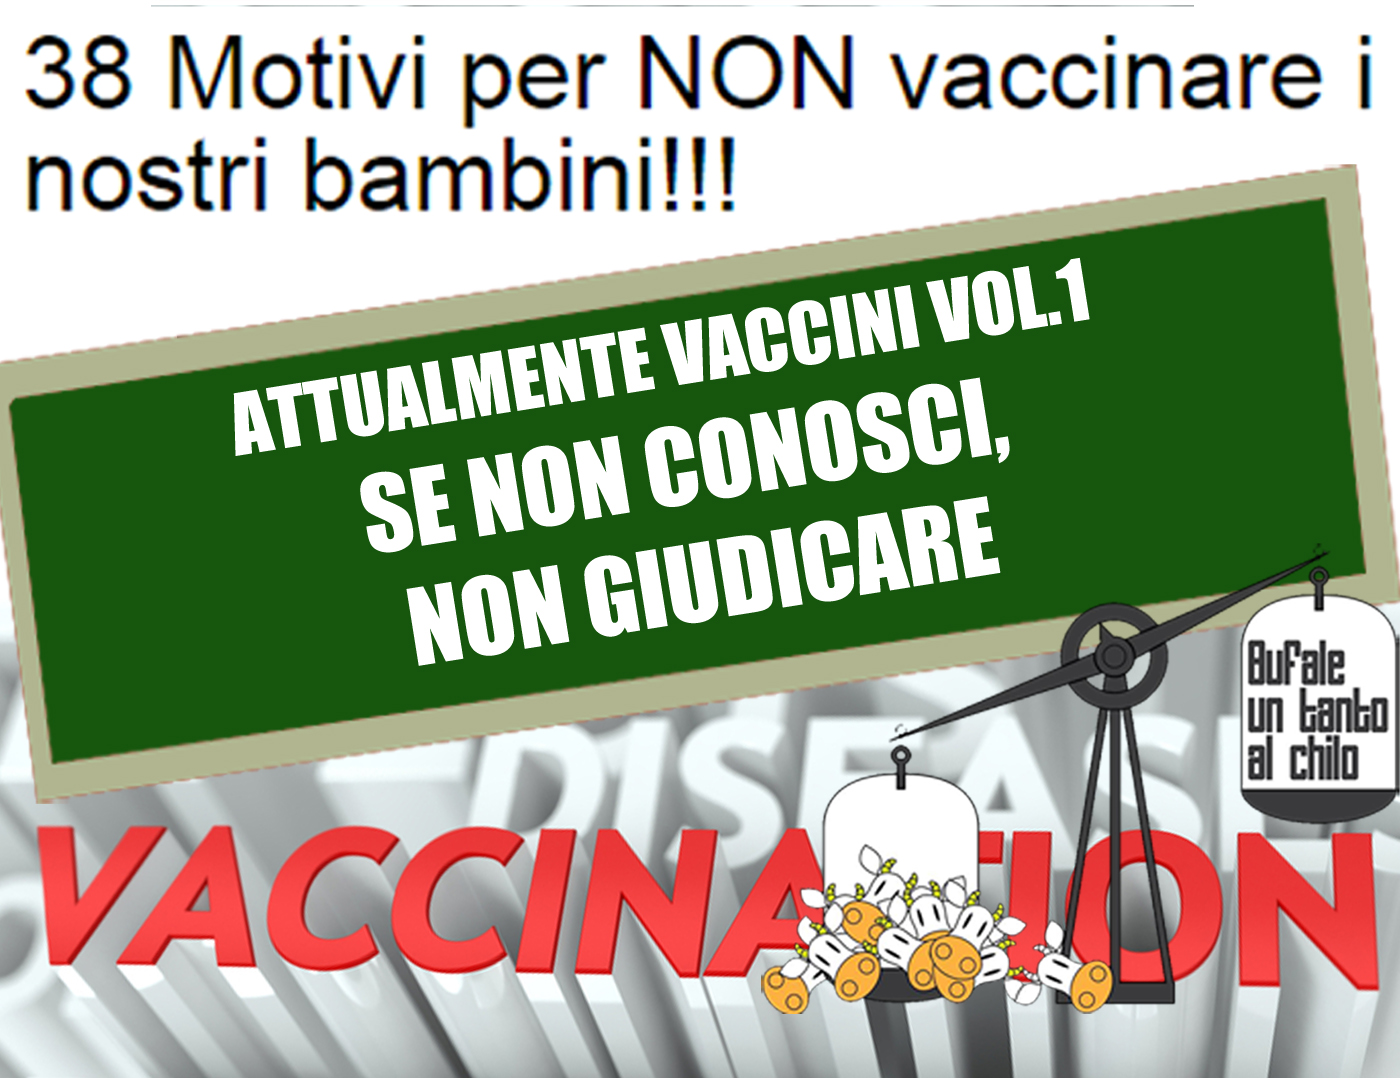 vaccini-38motivi-vol1